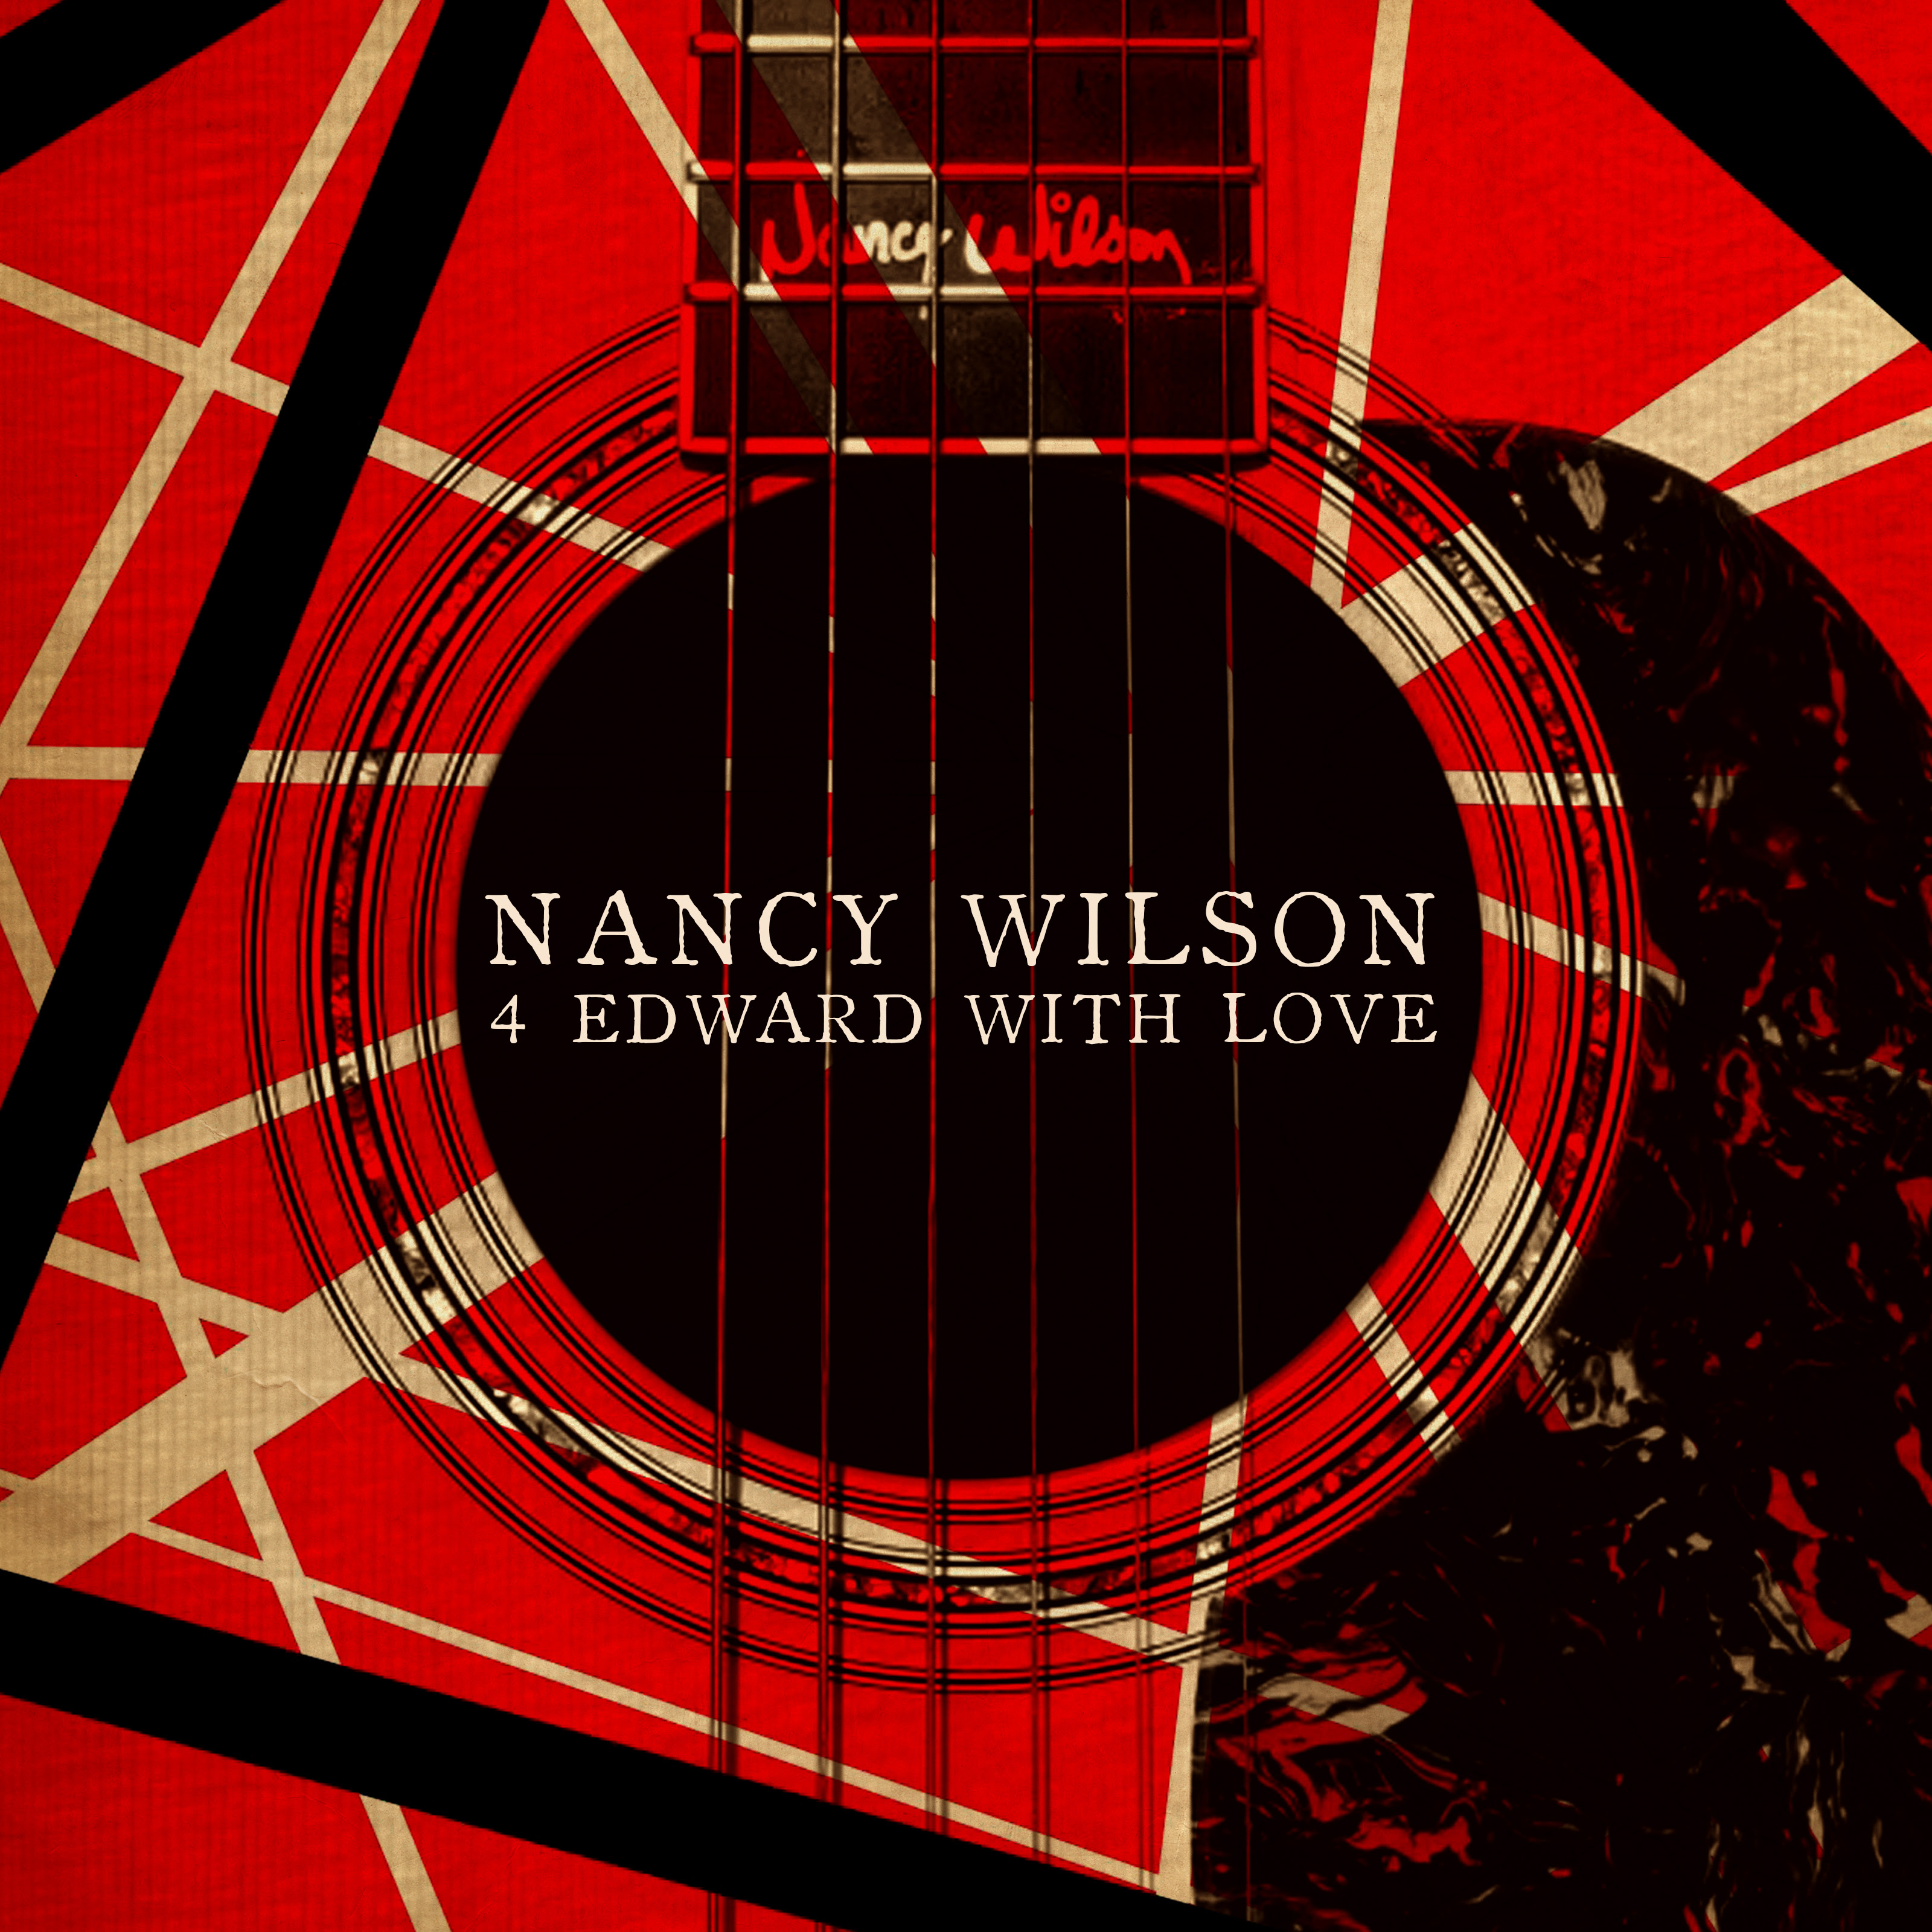 Heart's NANCY WILSON Releases New Tribute to Eddie Van Halen on Anniversary of His Passing